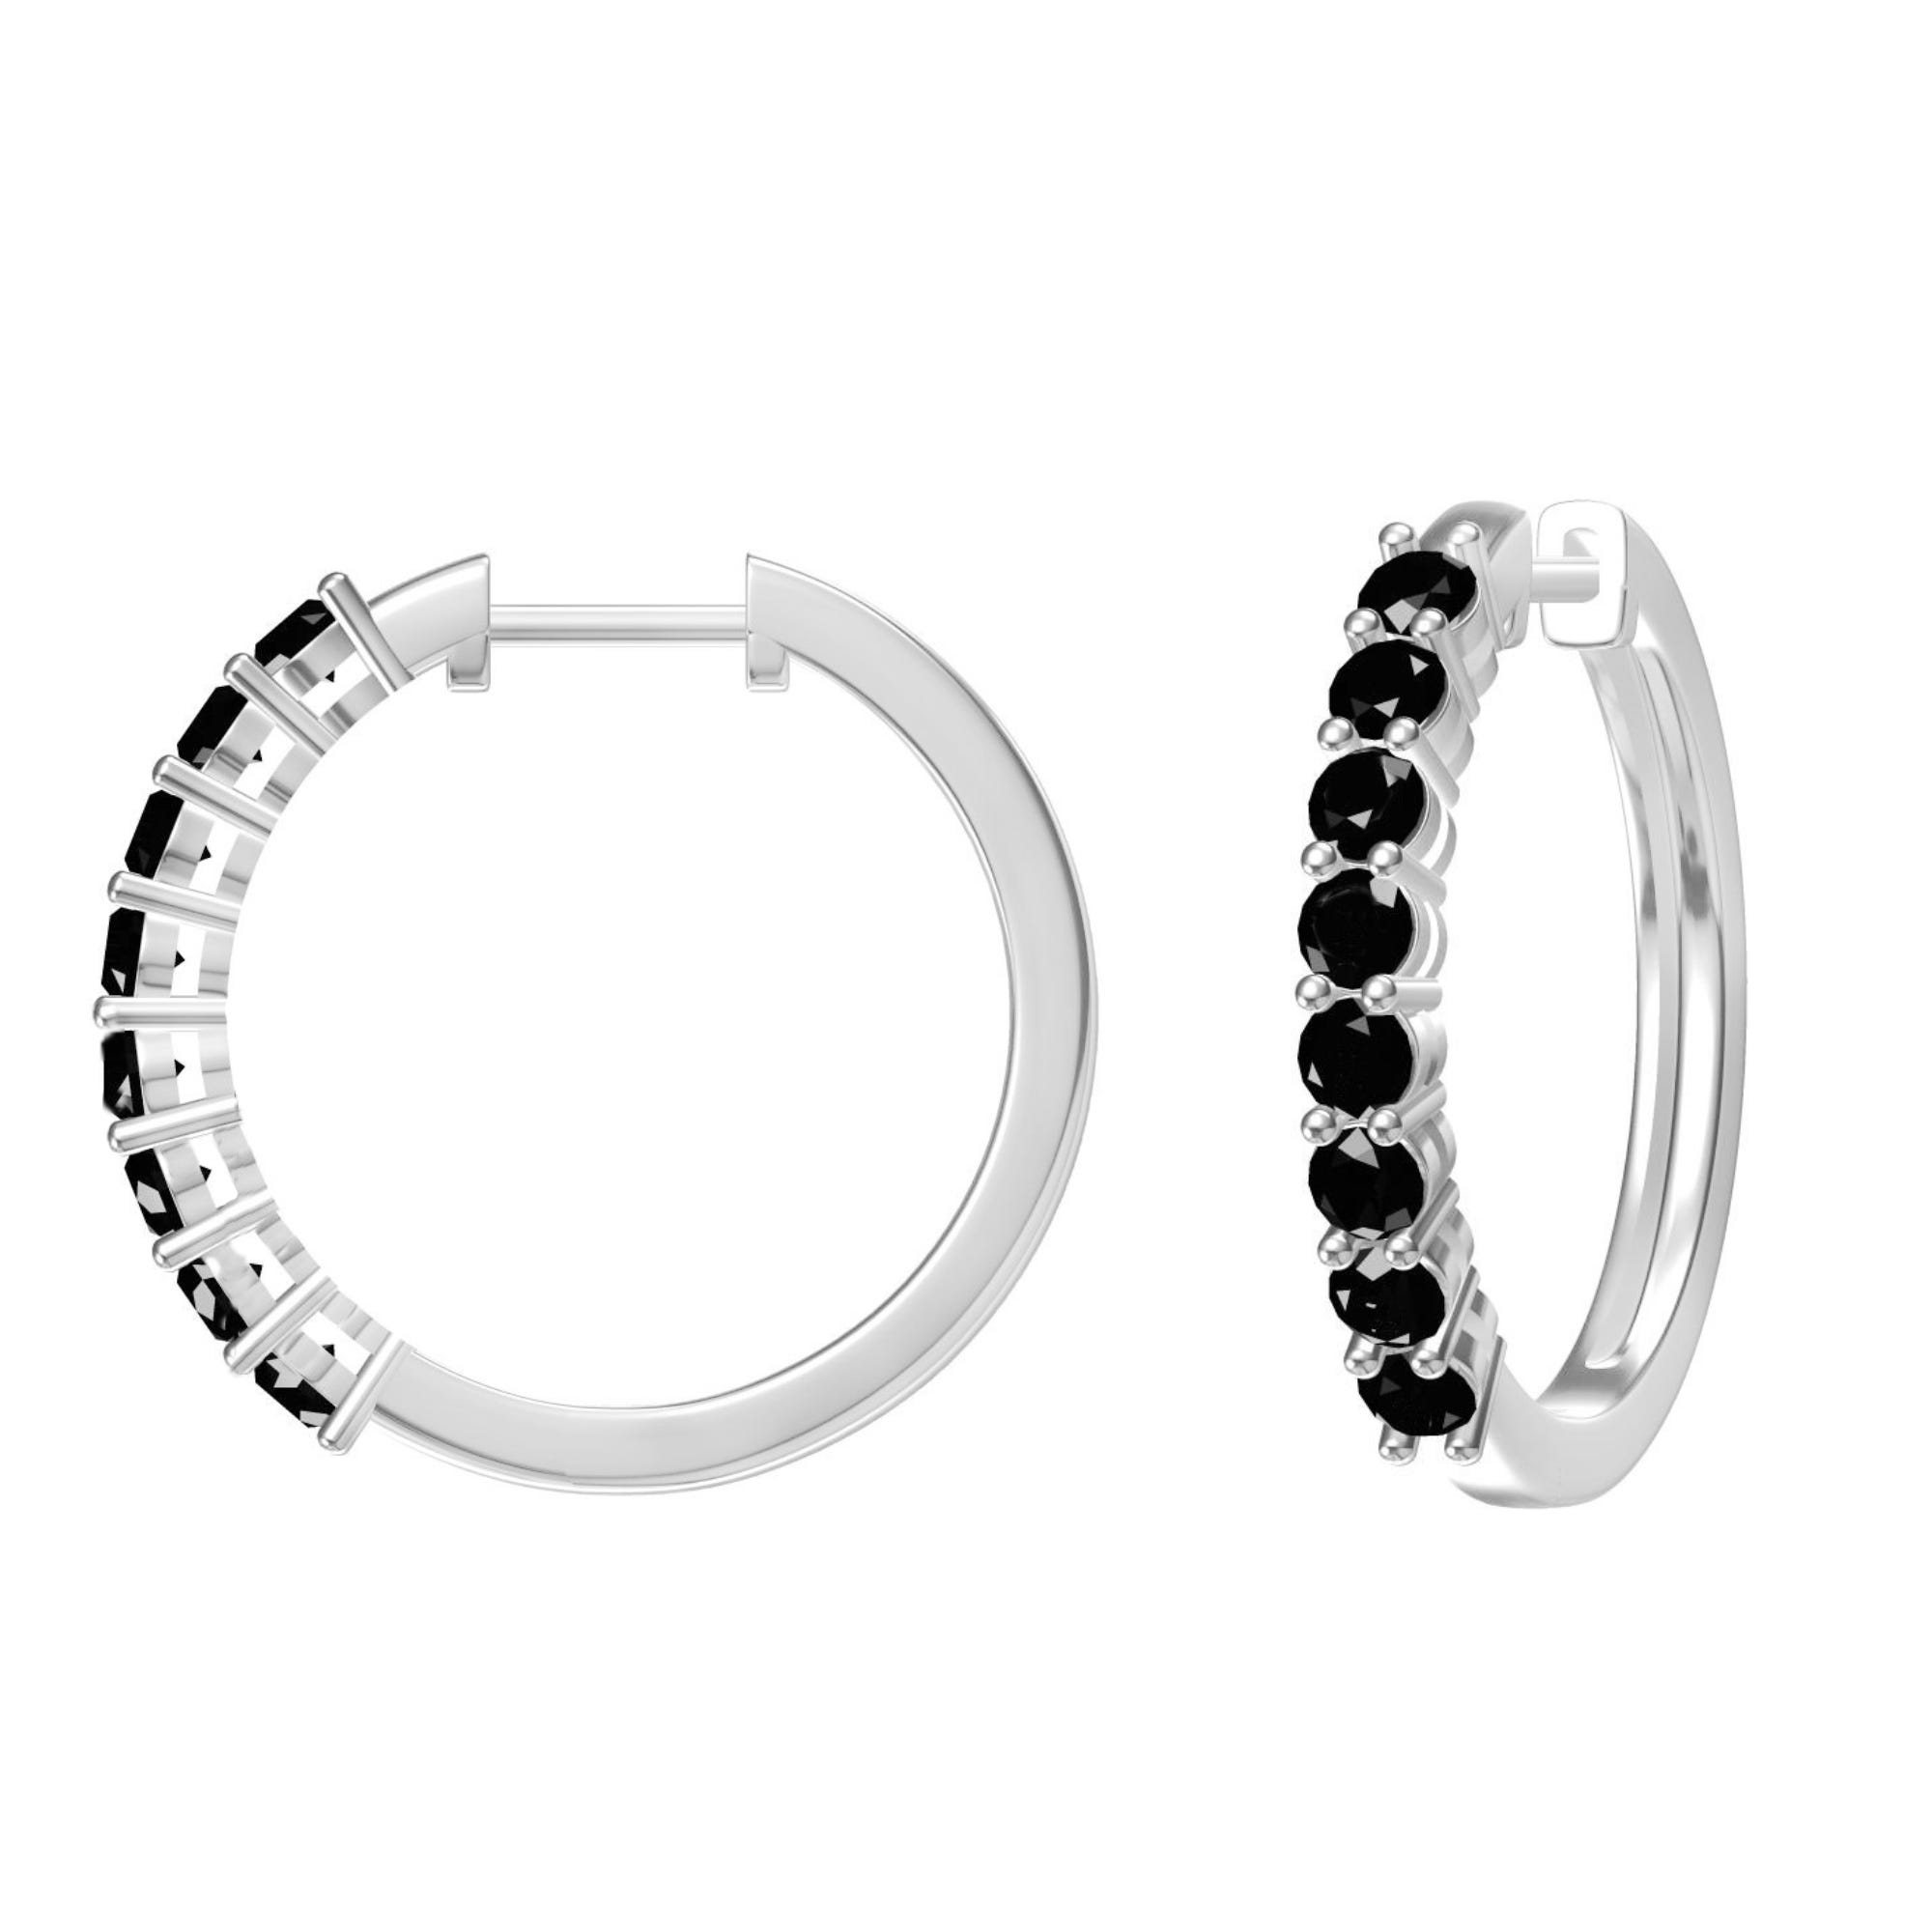 A pair of silver hoop earrings with black gemstone embellishments.